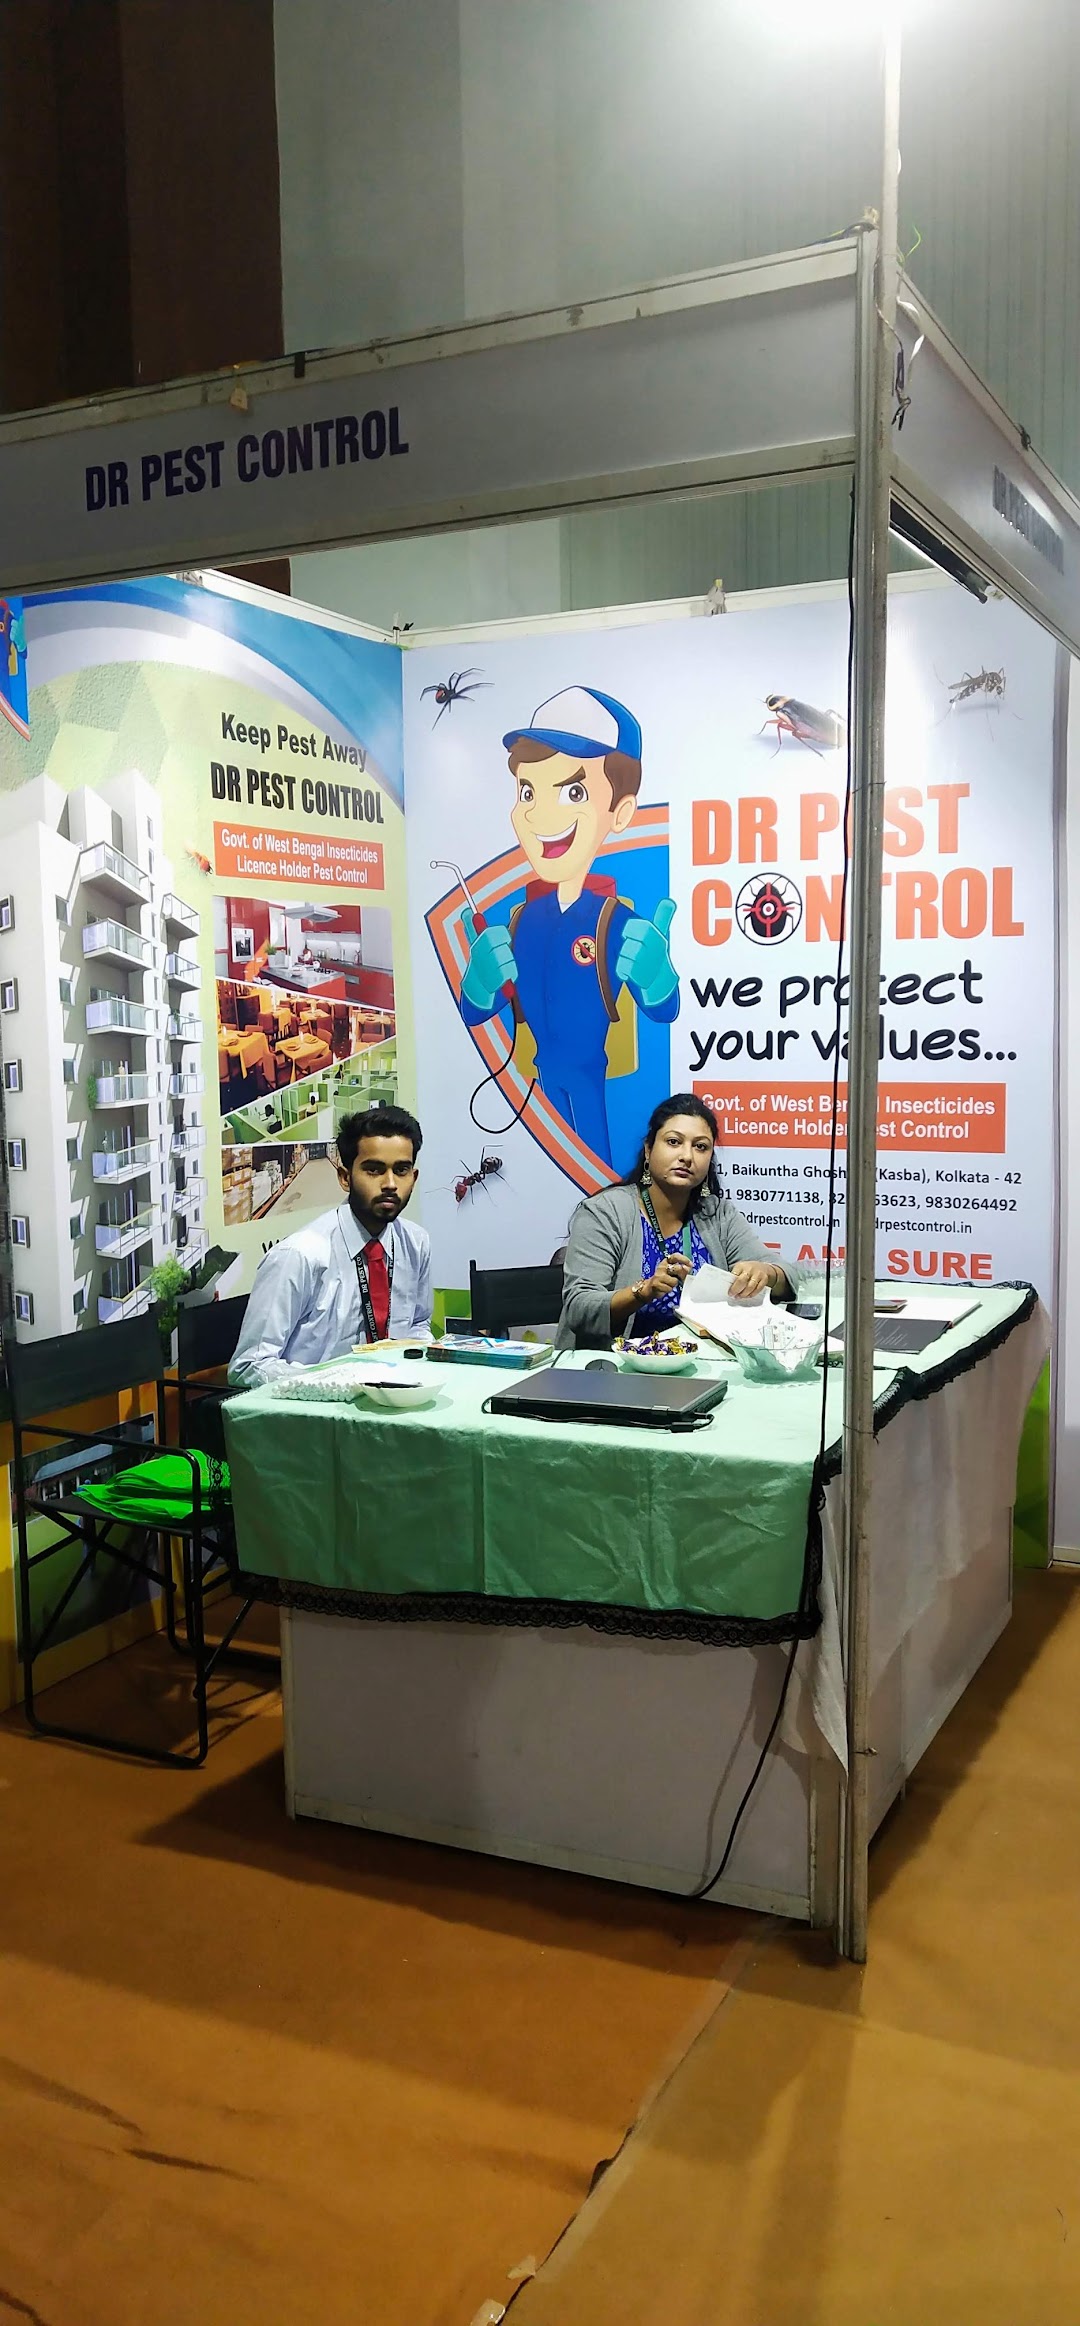 DR PEST CONTROL - Best Pest Control Service Provider in Kolkata